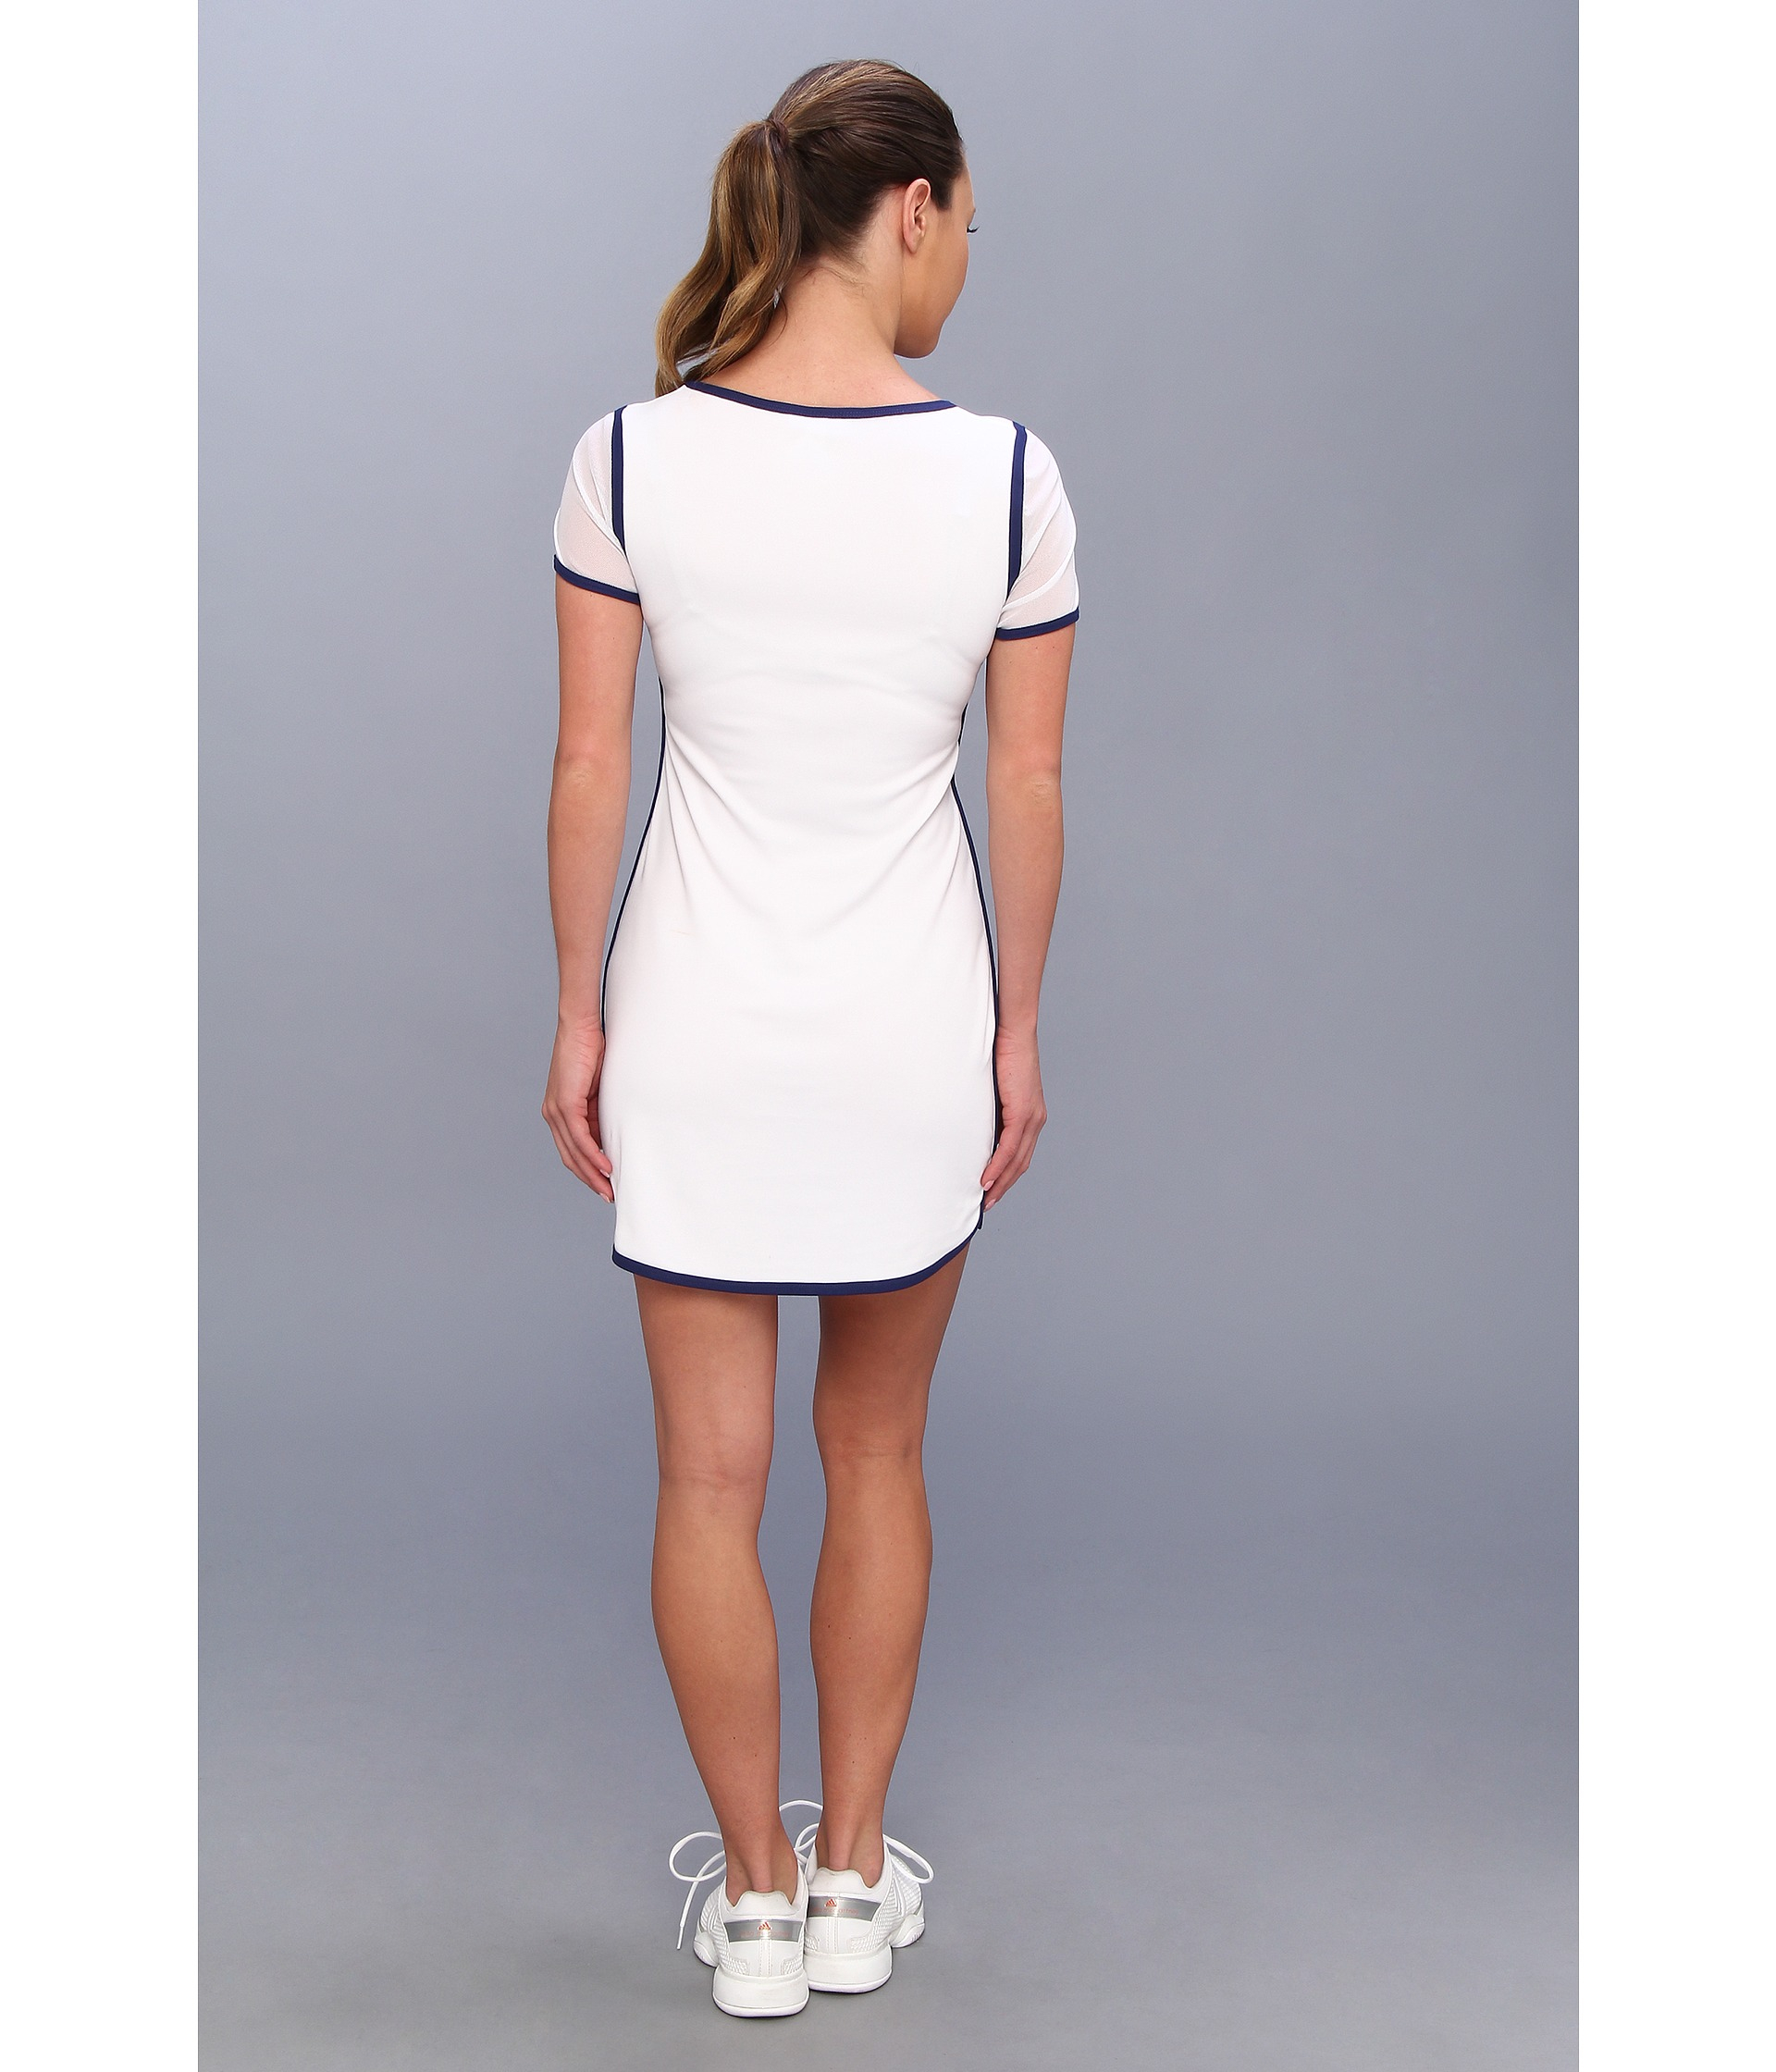 Lacoste Mesh Short Sleeve Tennis Dress in White | Lyst